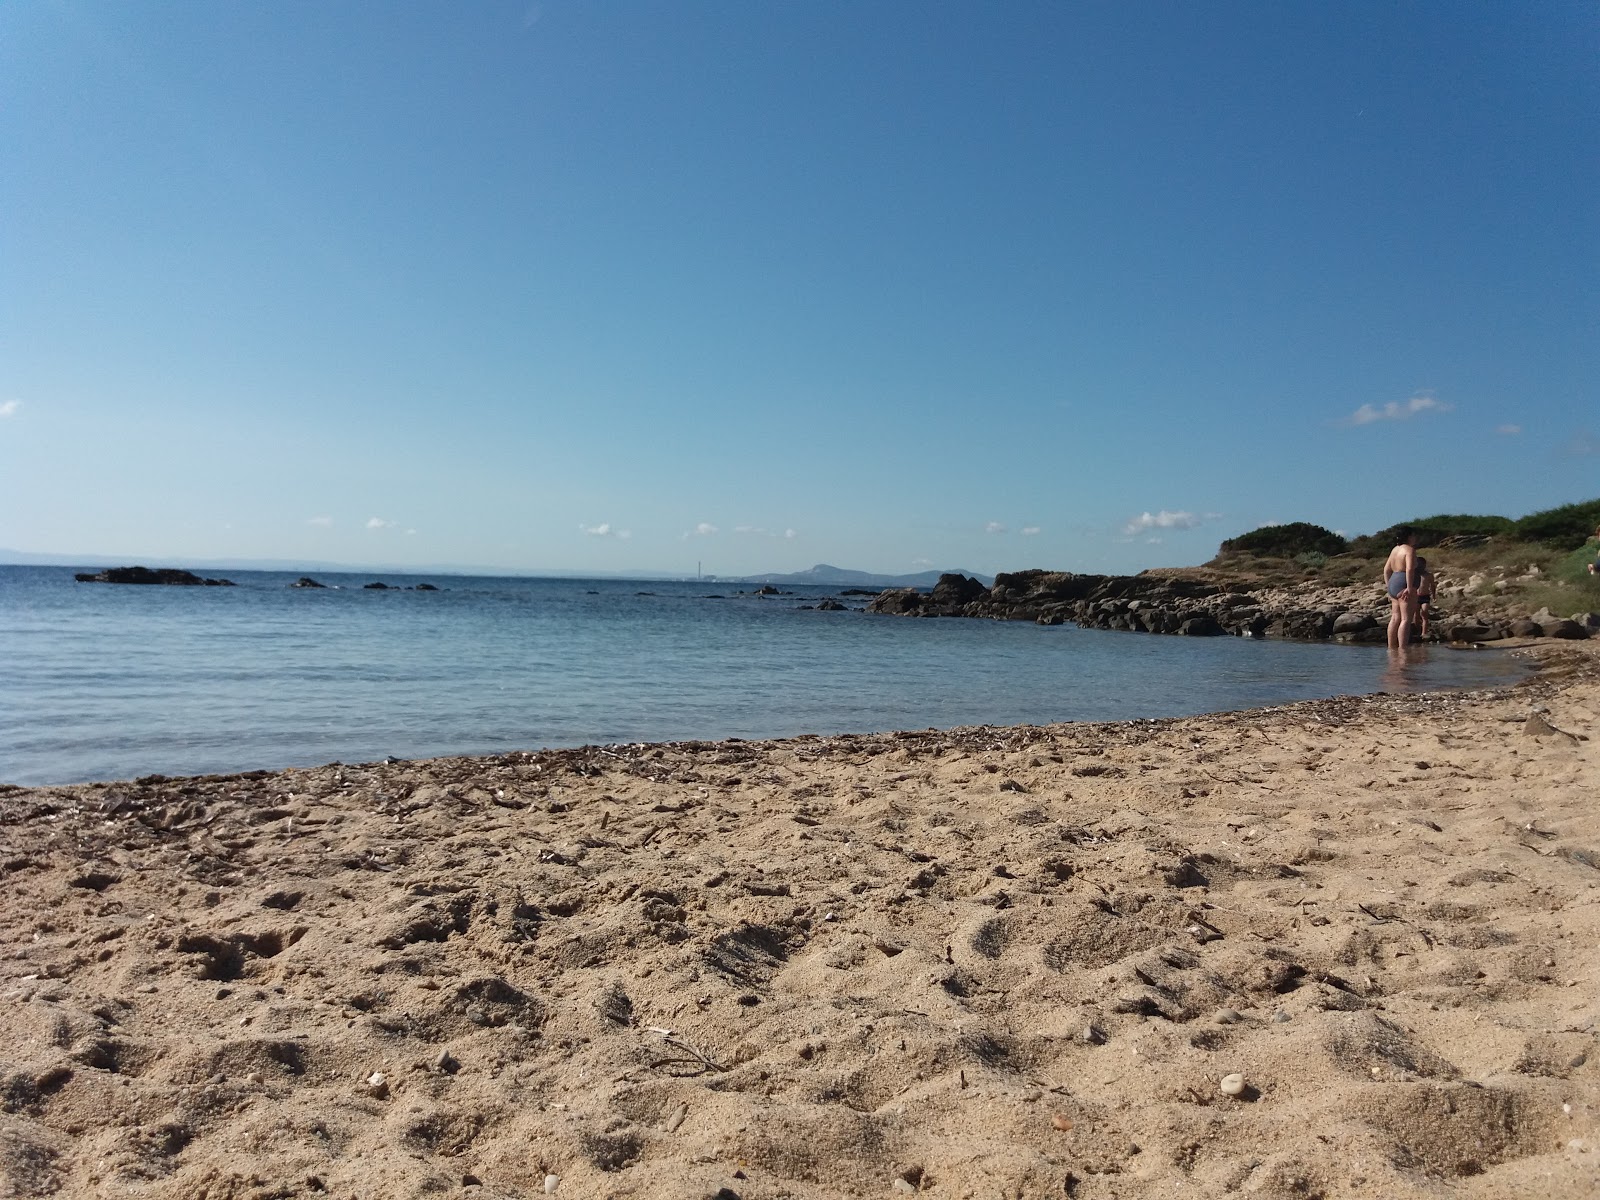 Foto van Spiaggia Punta Negra met gemiddeld niveau van netheid